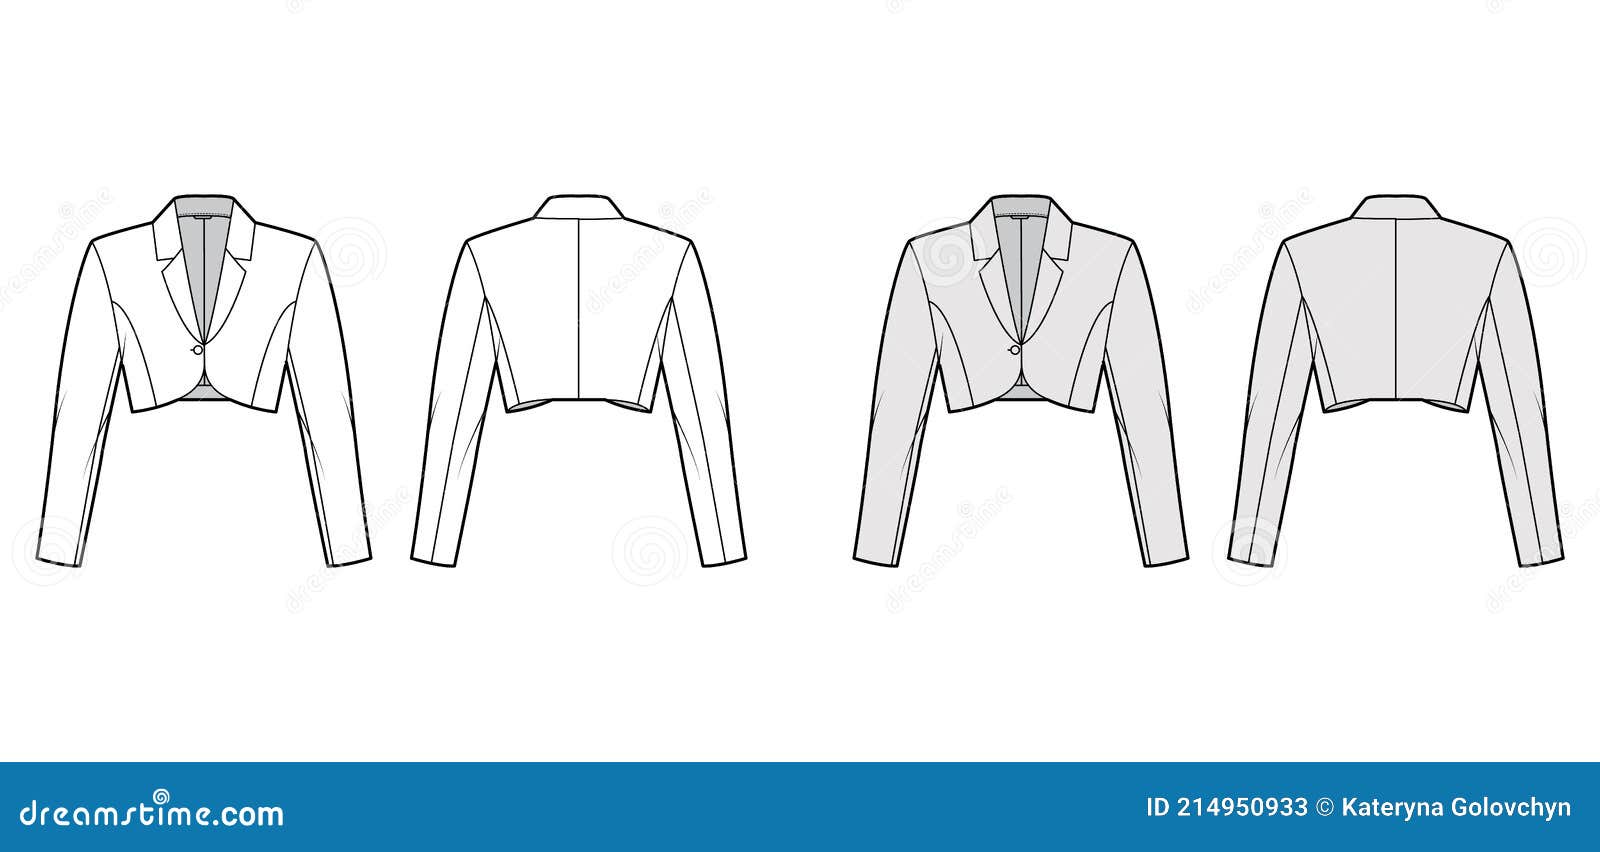 Bolero Jacket Technical Fashion Illustration with Crop Waist Length ...